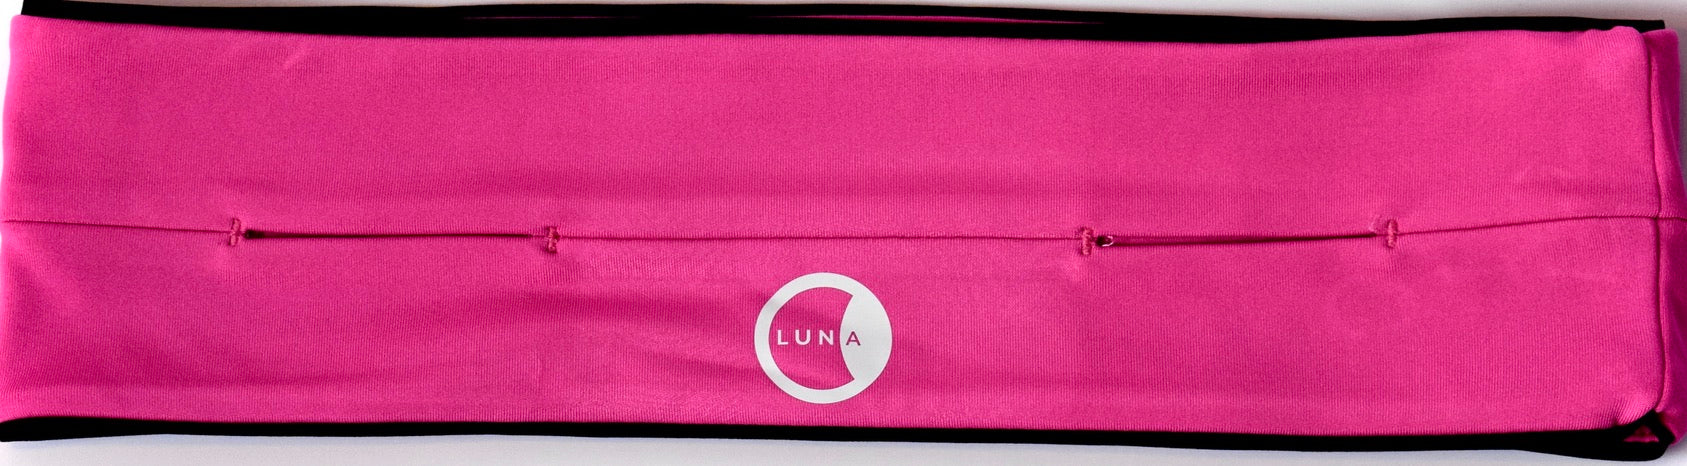 pink Lunabands lunabelt running fitness waist flip belt 